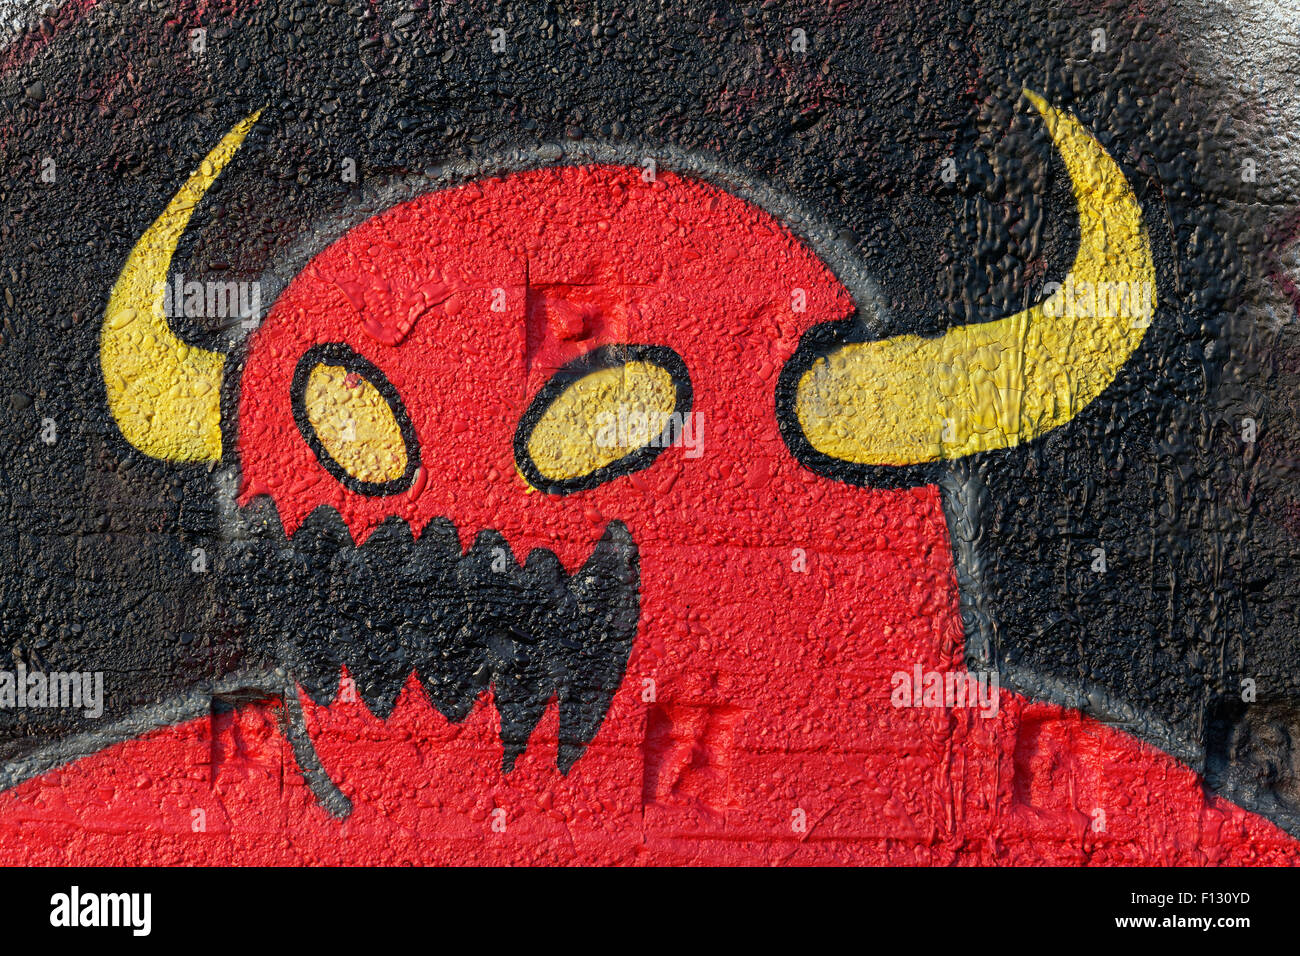 Red monster with yellow horns, fantasy figure, graffiti, street art, Duisburg, North Rhine-Westphalia, Germany Stock Photo